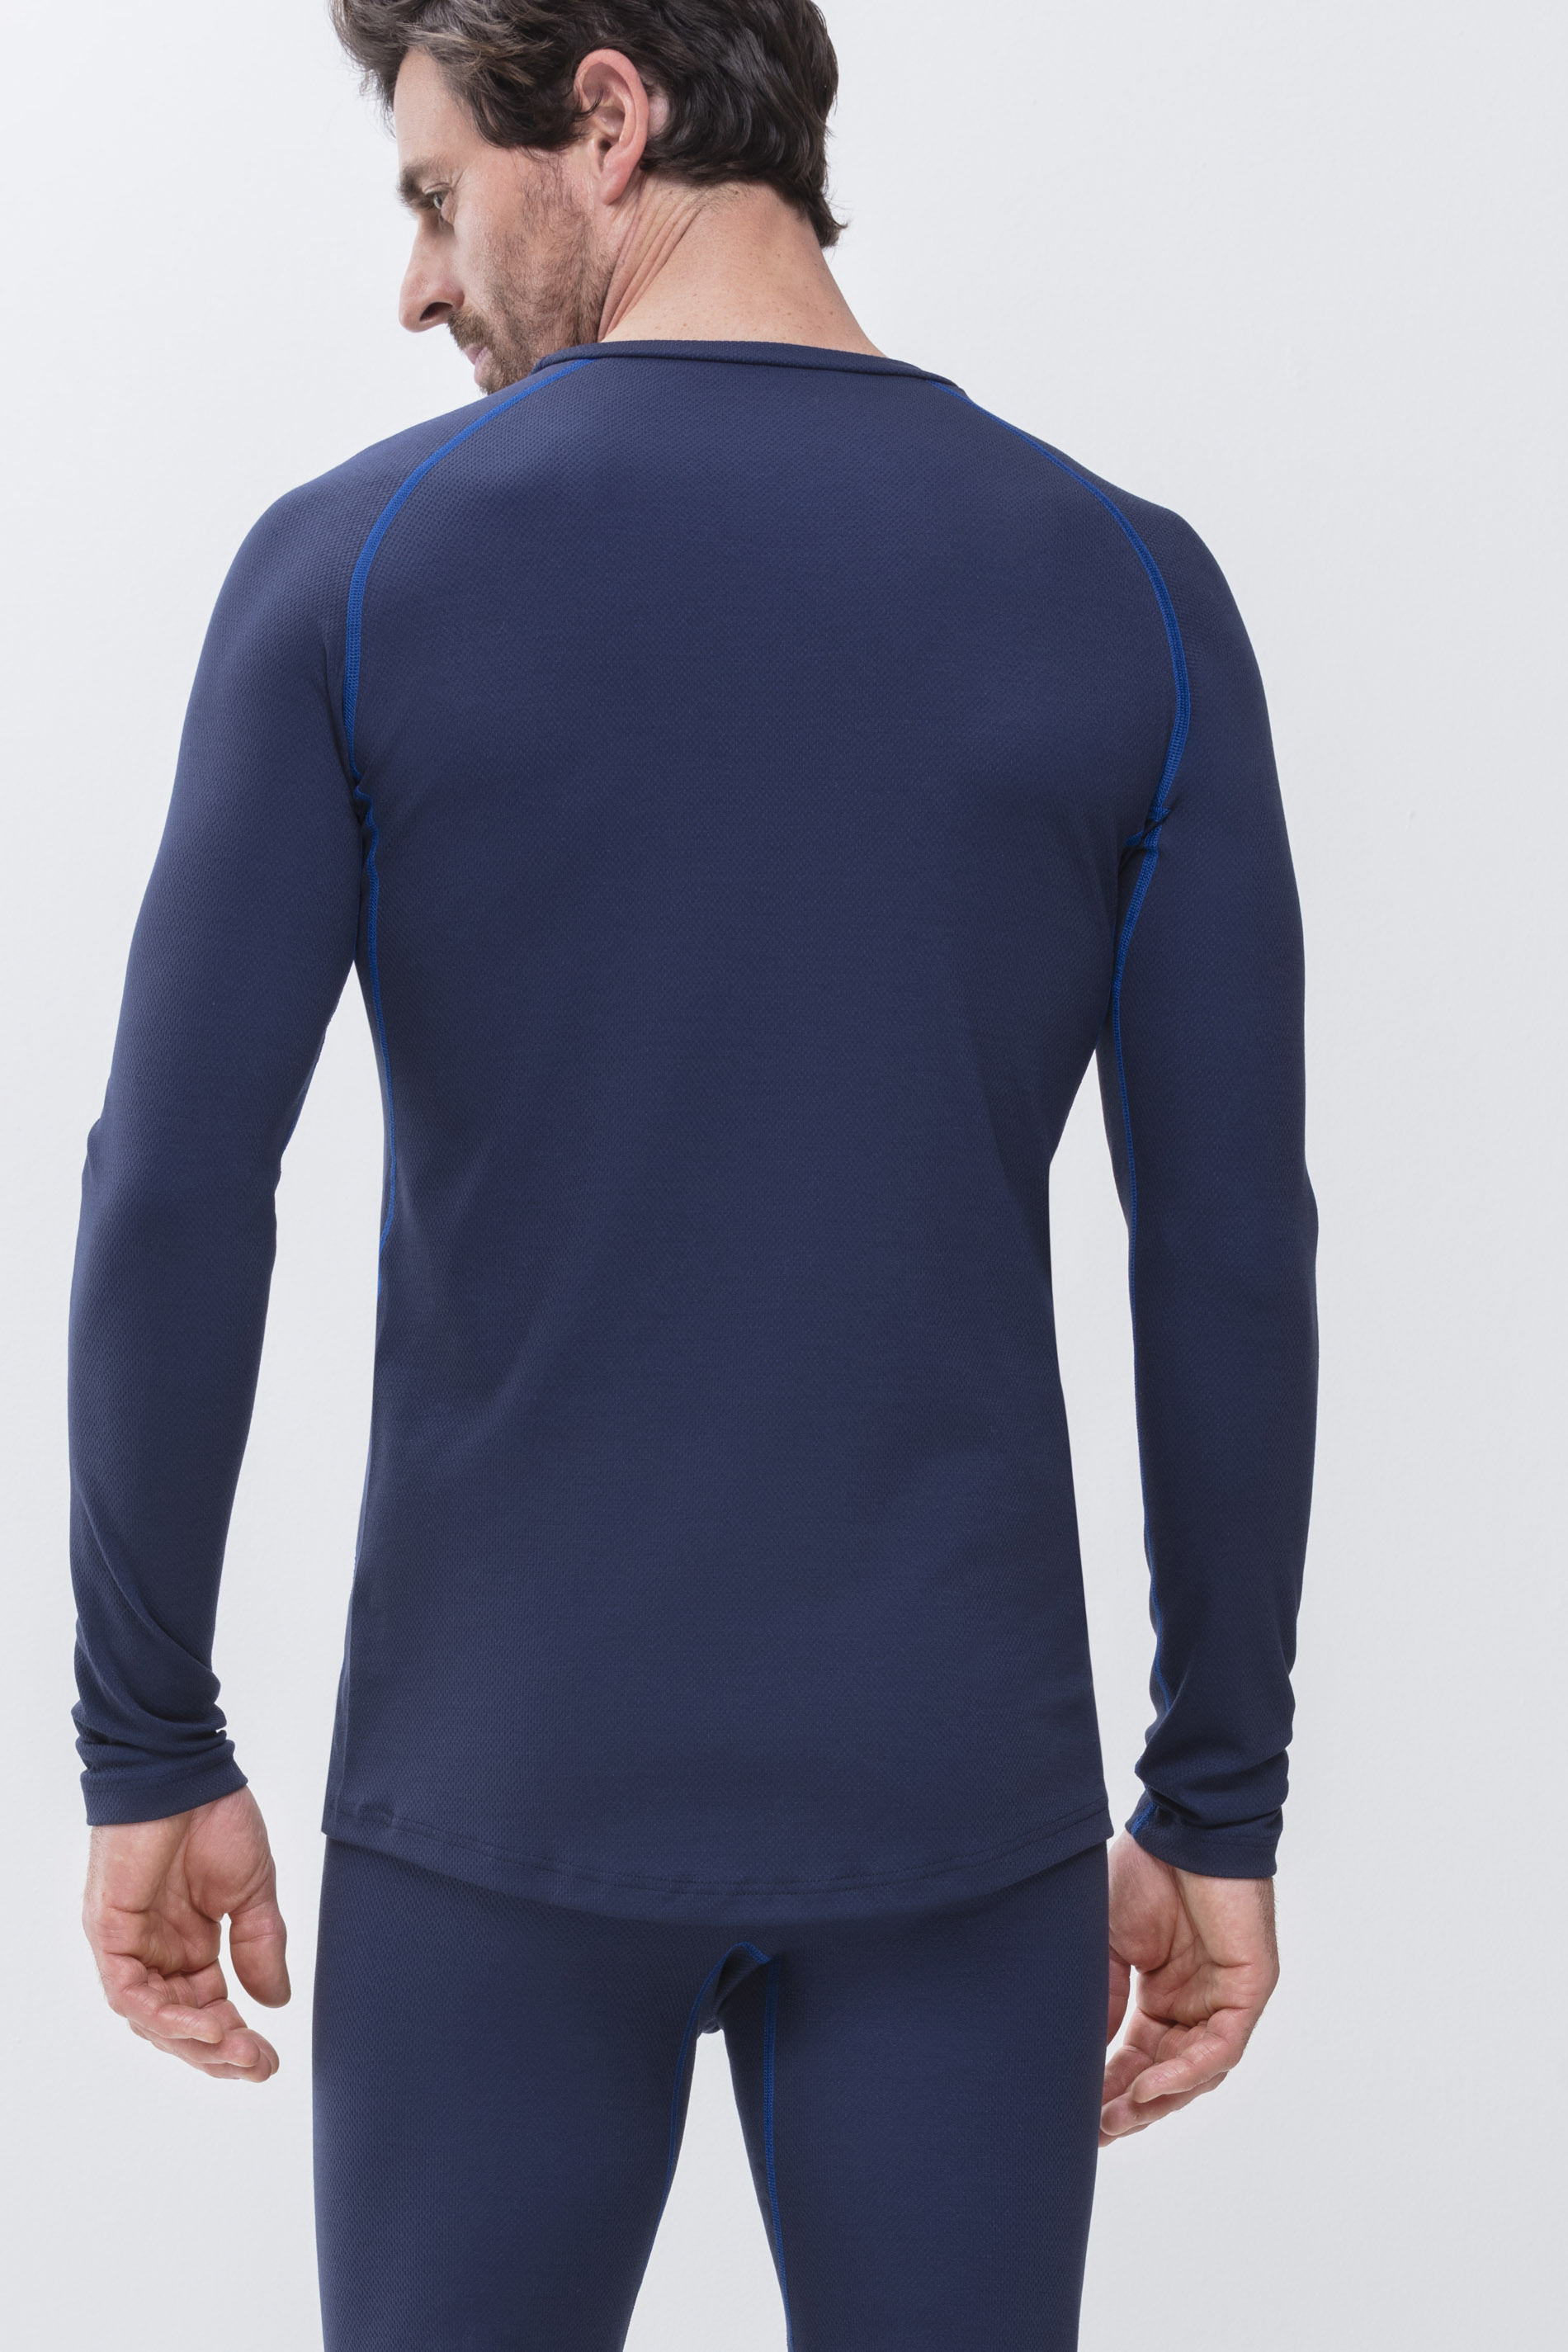 Long-Sleeved Shirt Yacht Blue High Performance Rear View | mey®